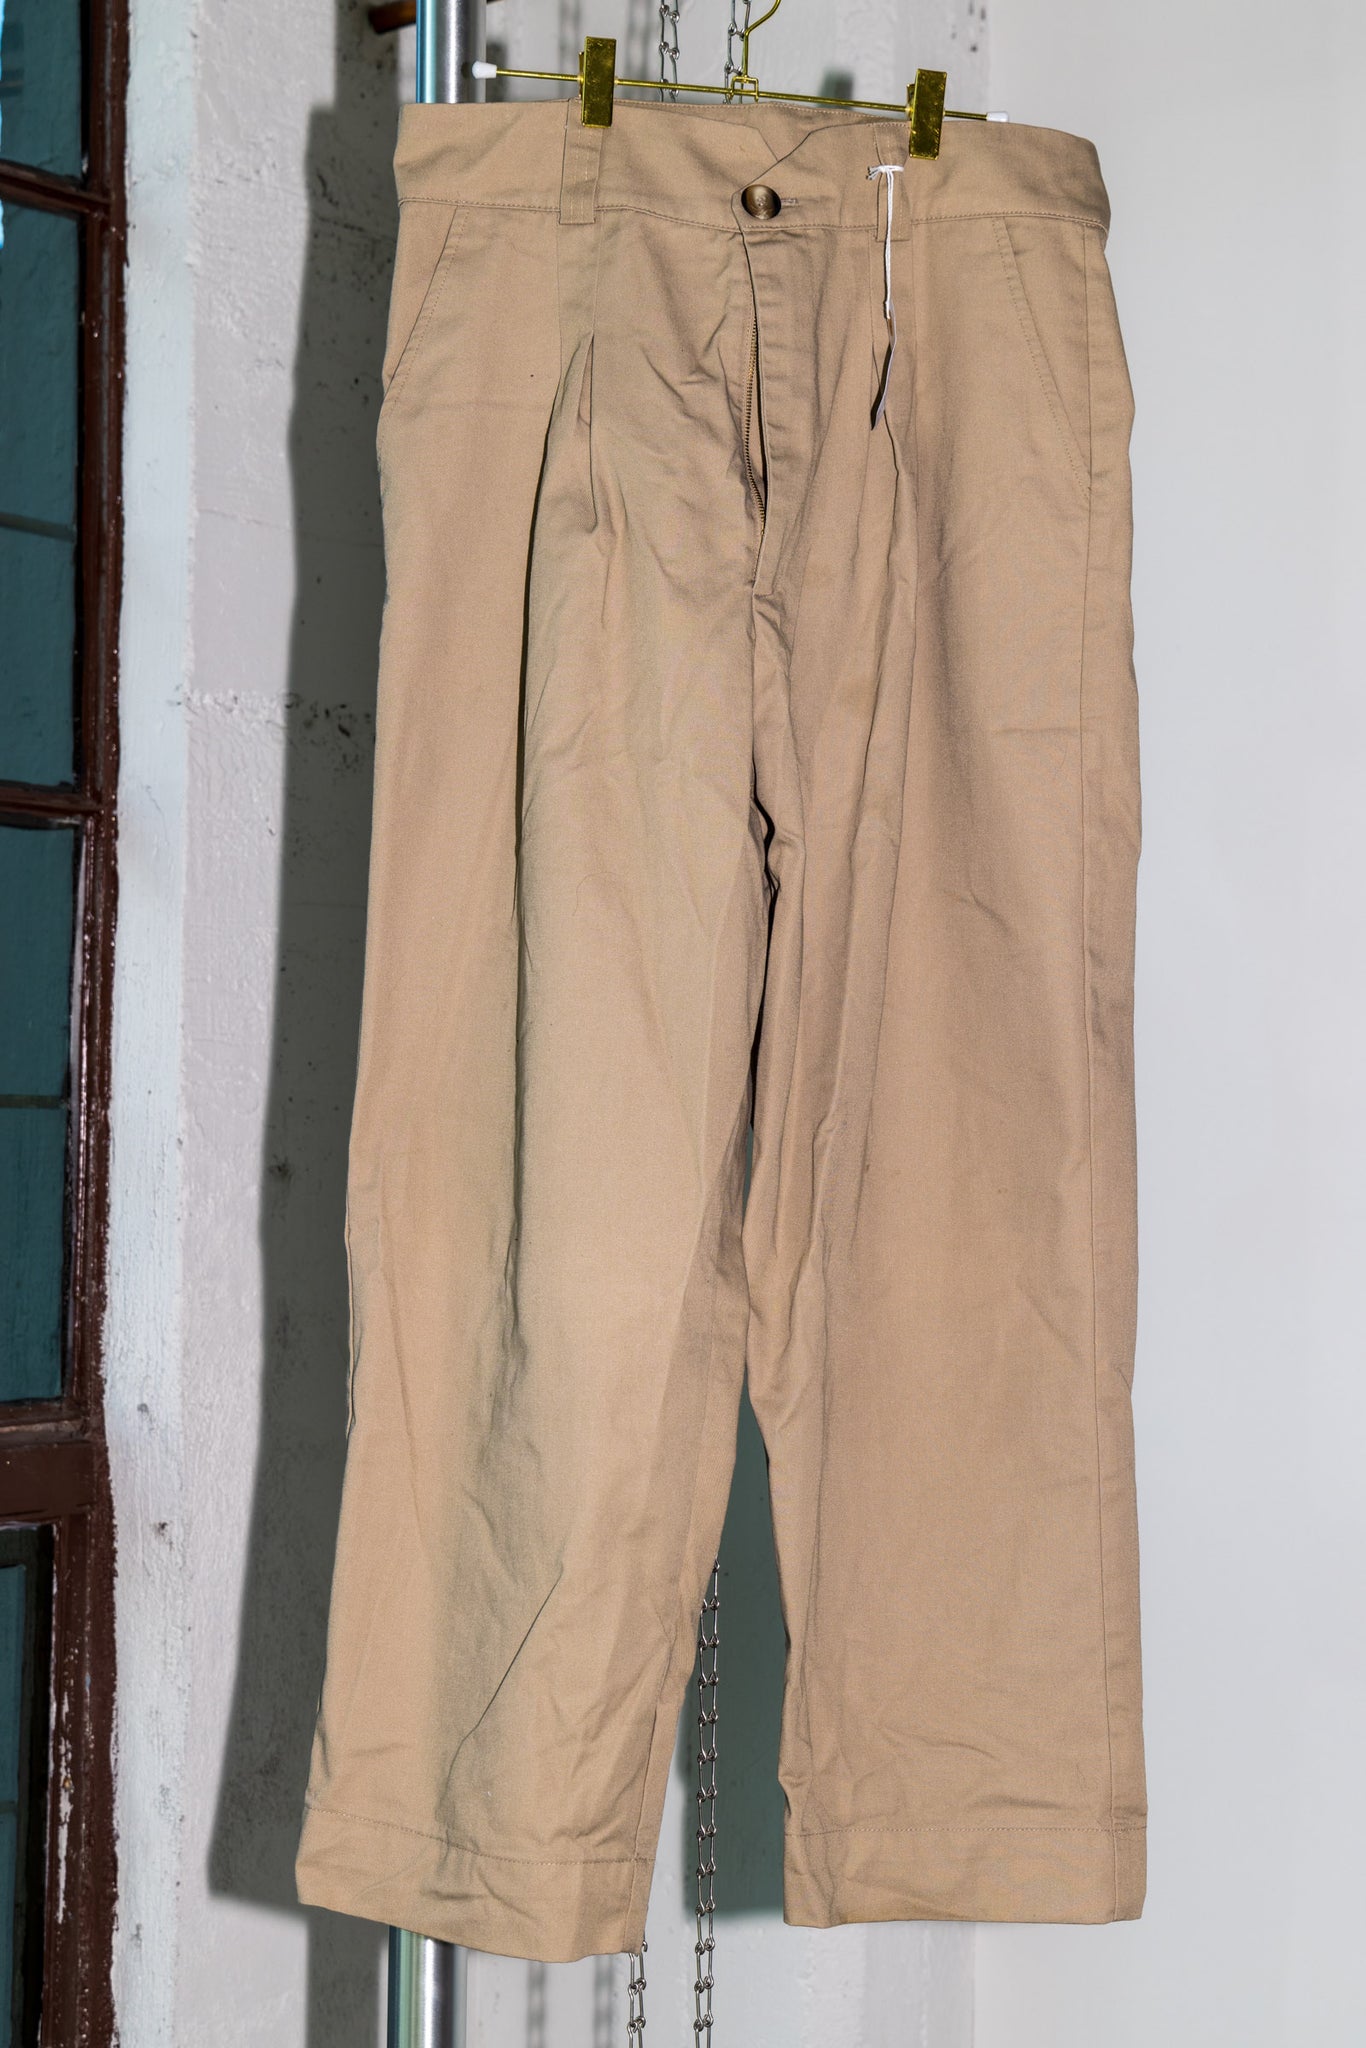 SAMPLE - Pants - size L